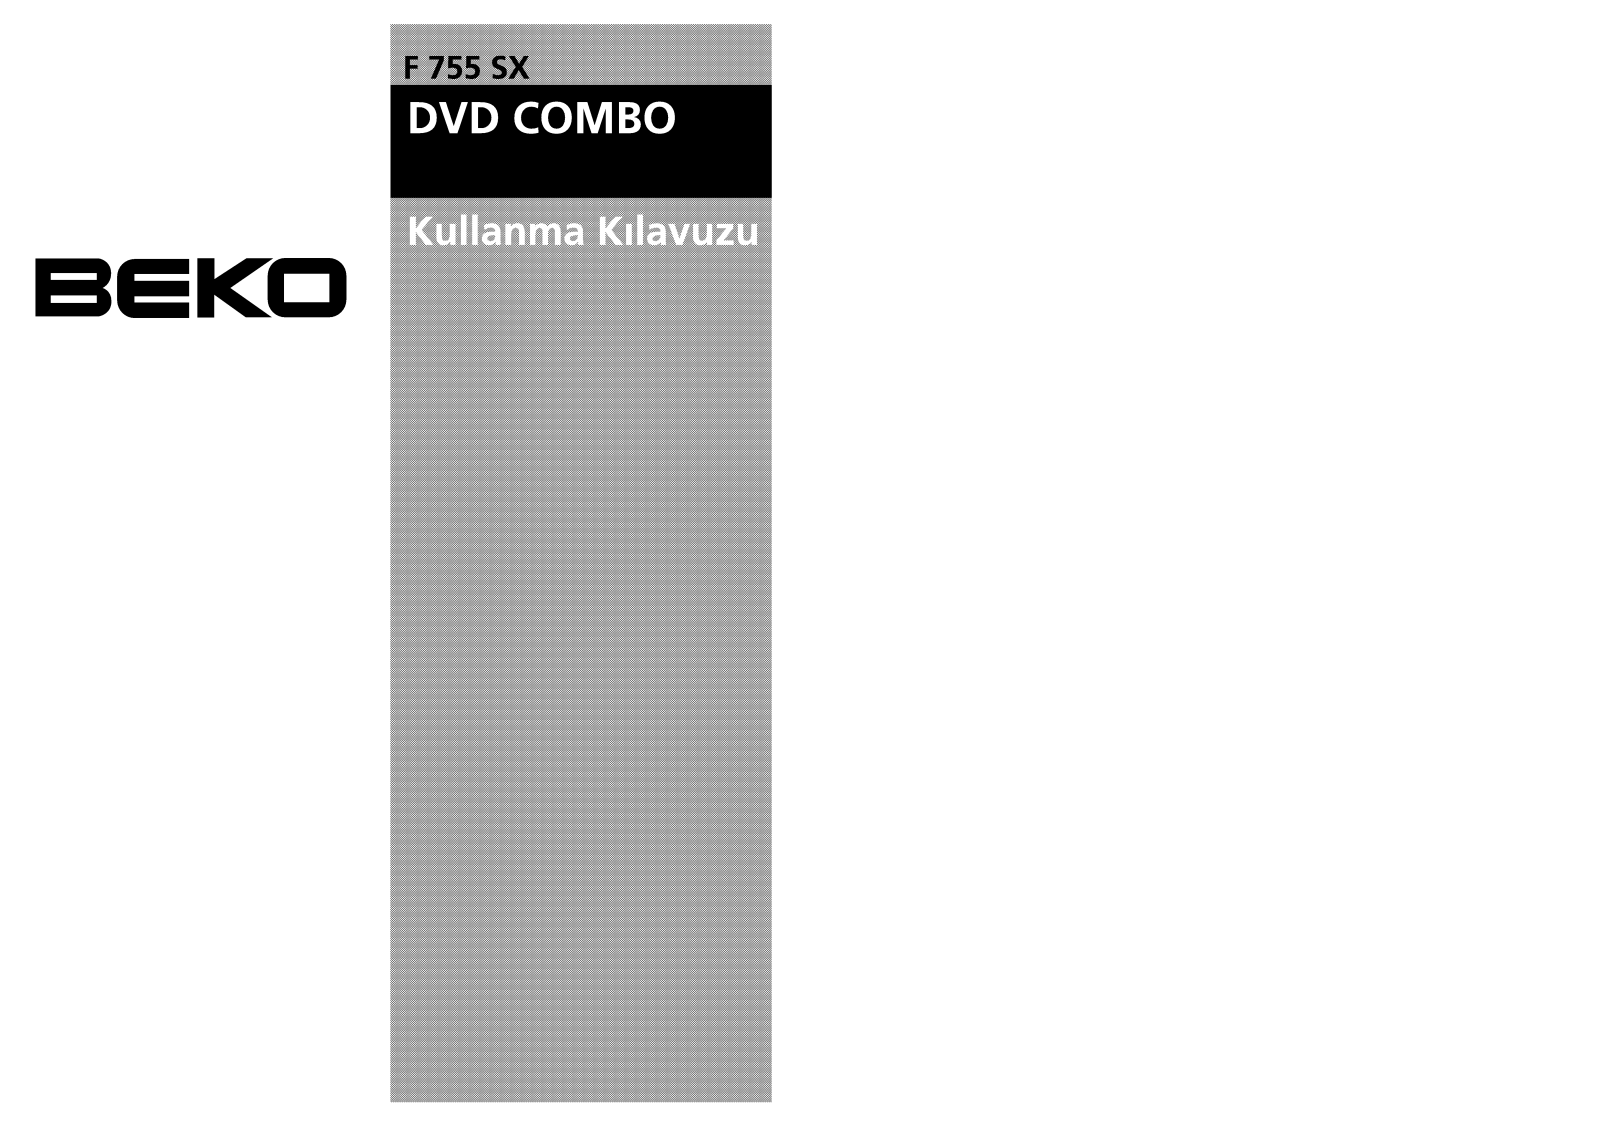 Beko F 755 SX DVD COMBO Manual